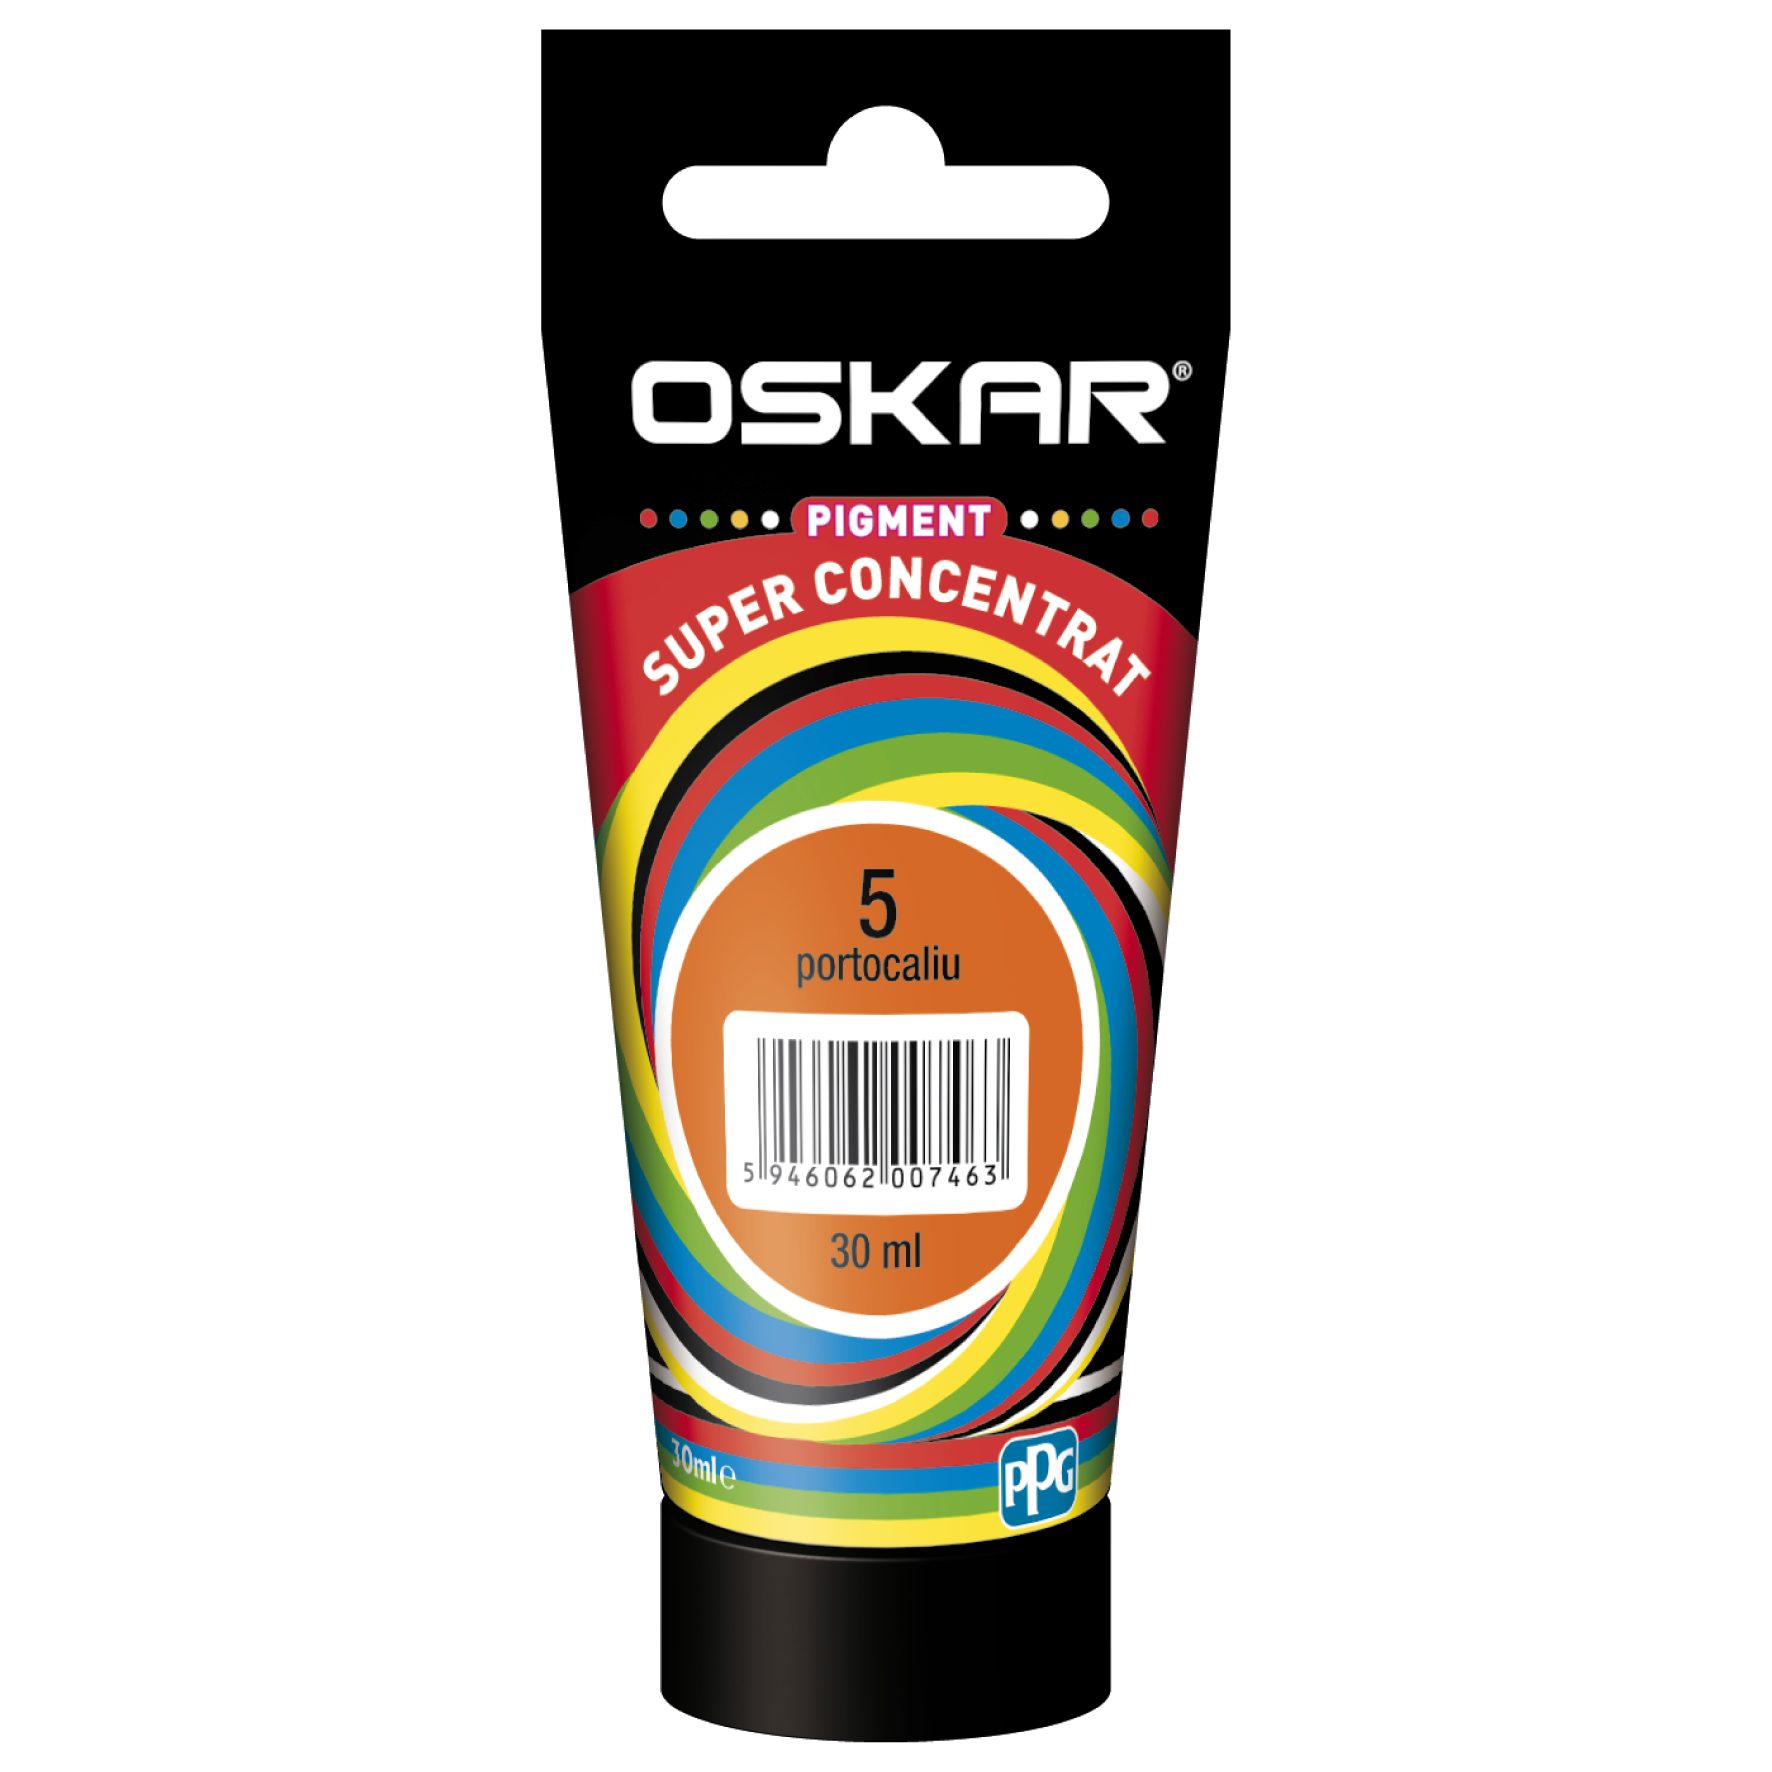 Pigment vopsea lavabila Oskar super concentrat, portocaliu 5, 30 ml Coloranti